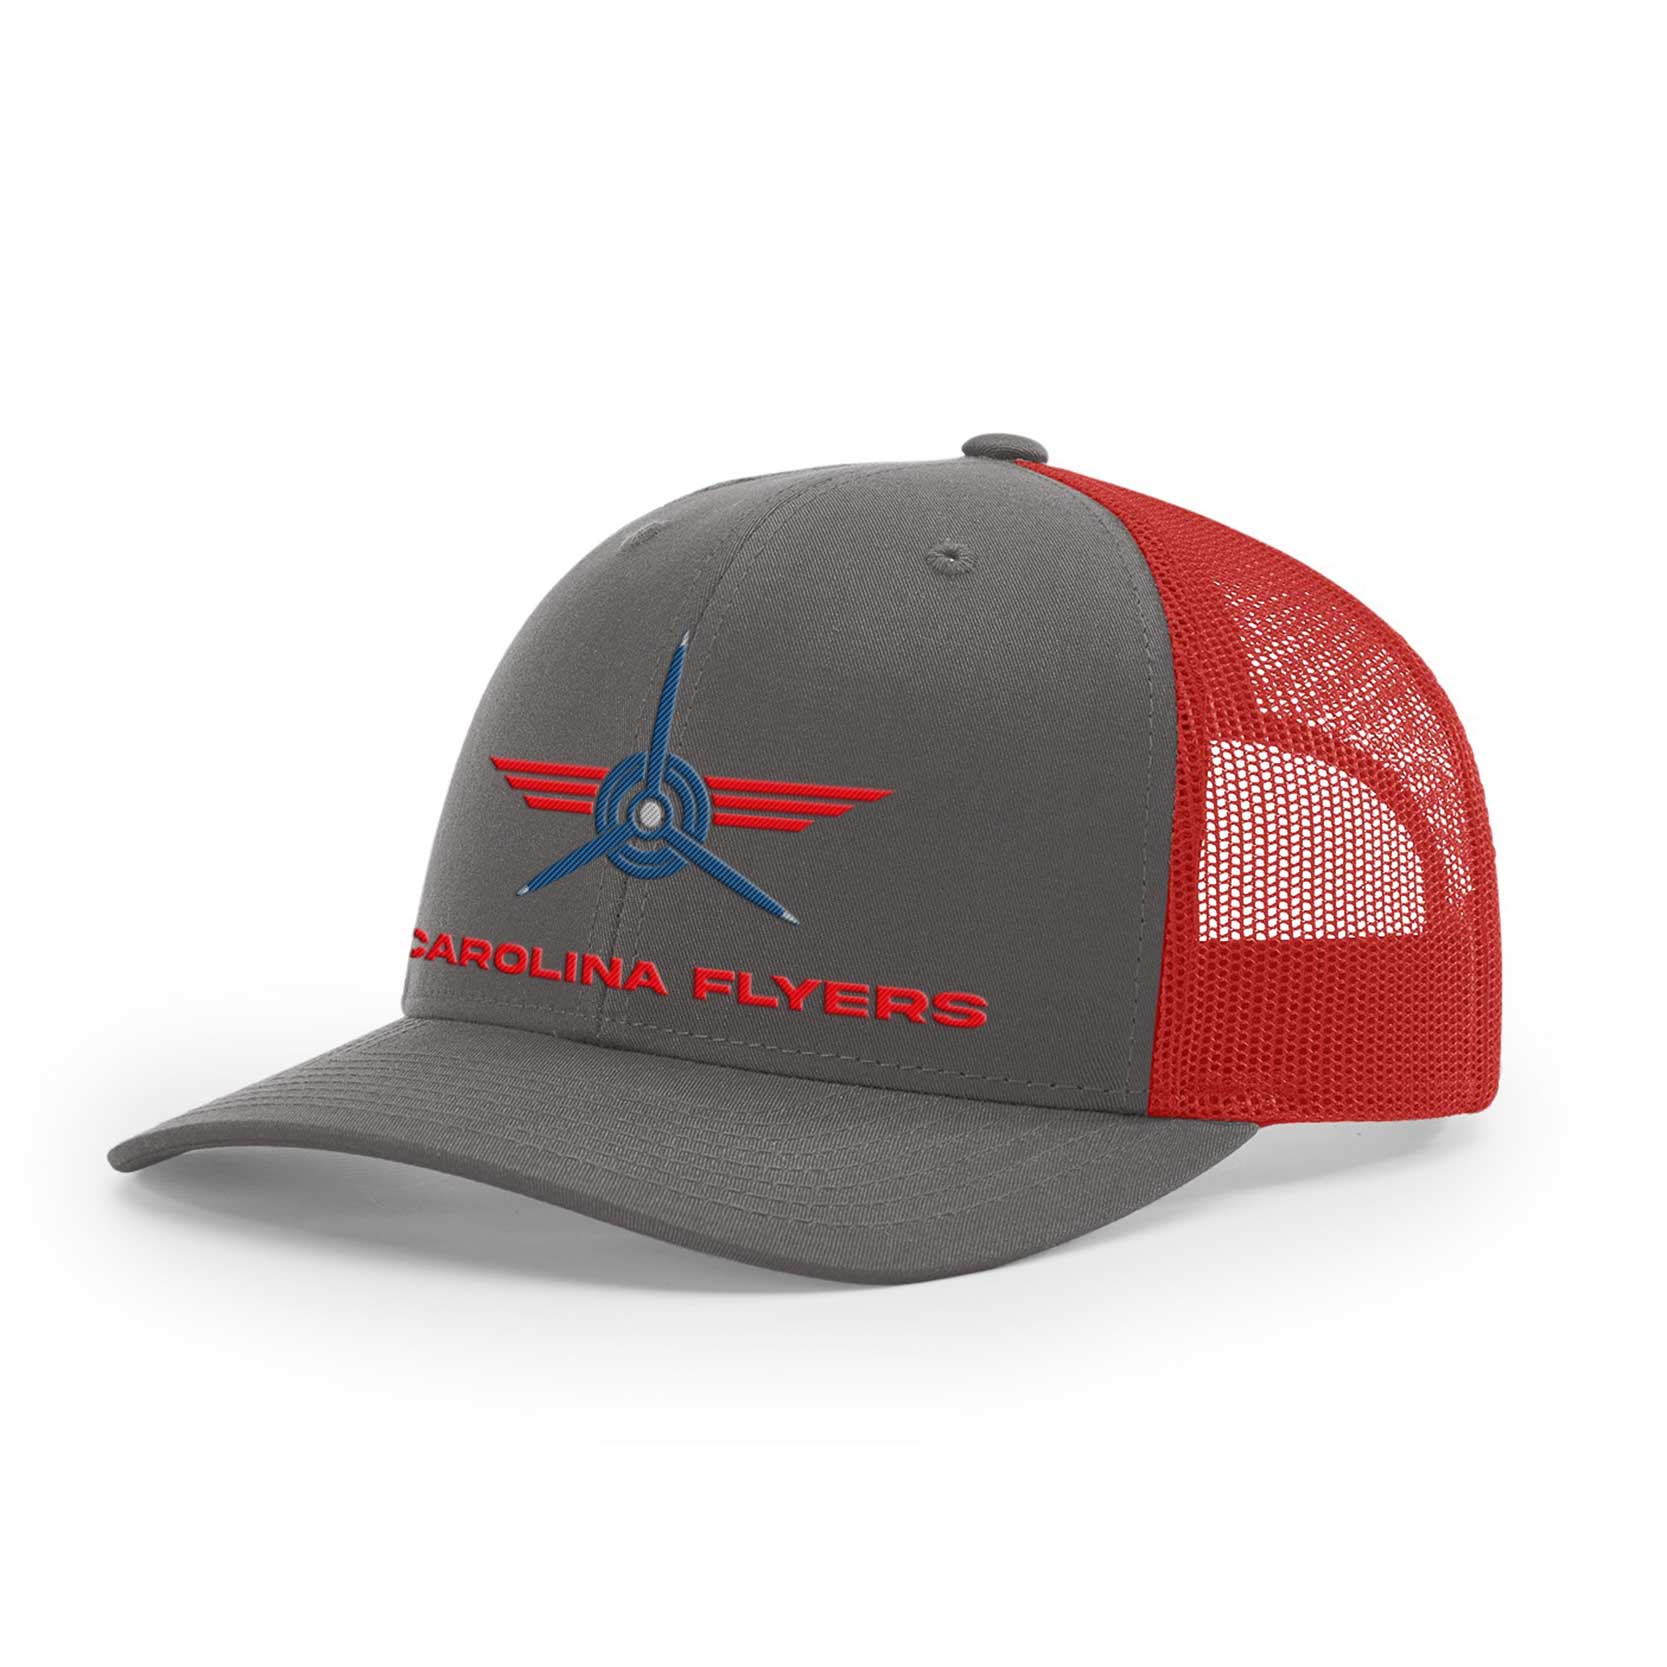 Carolina Flyers Trucker Hat